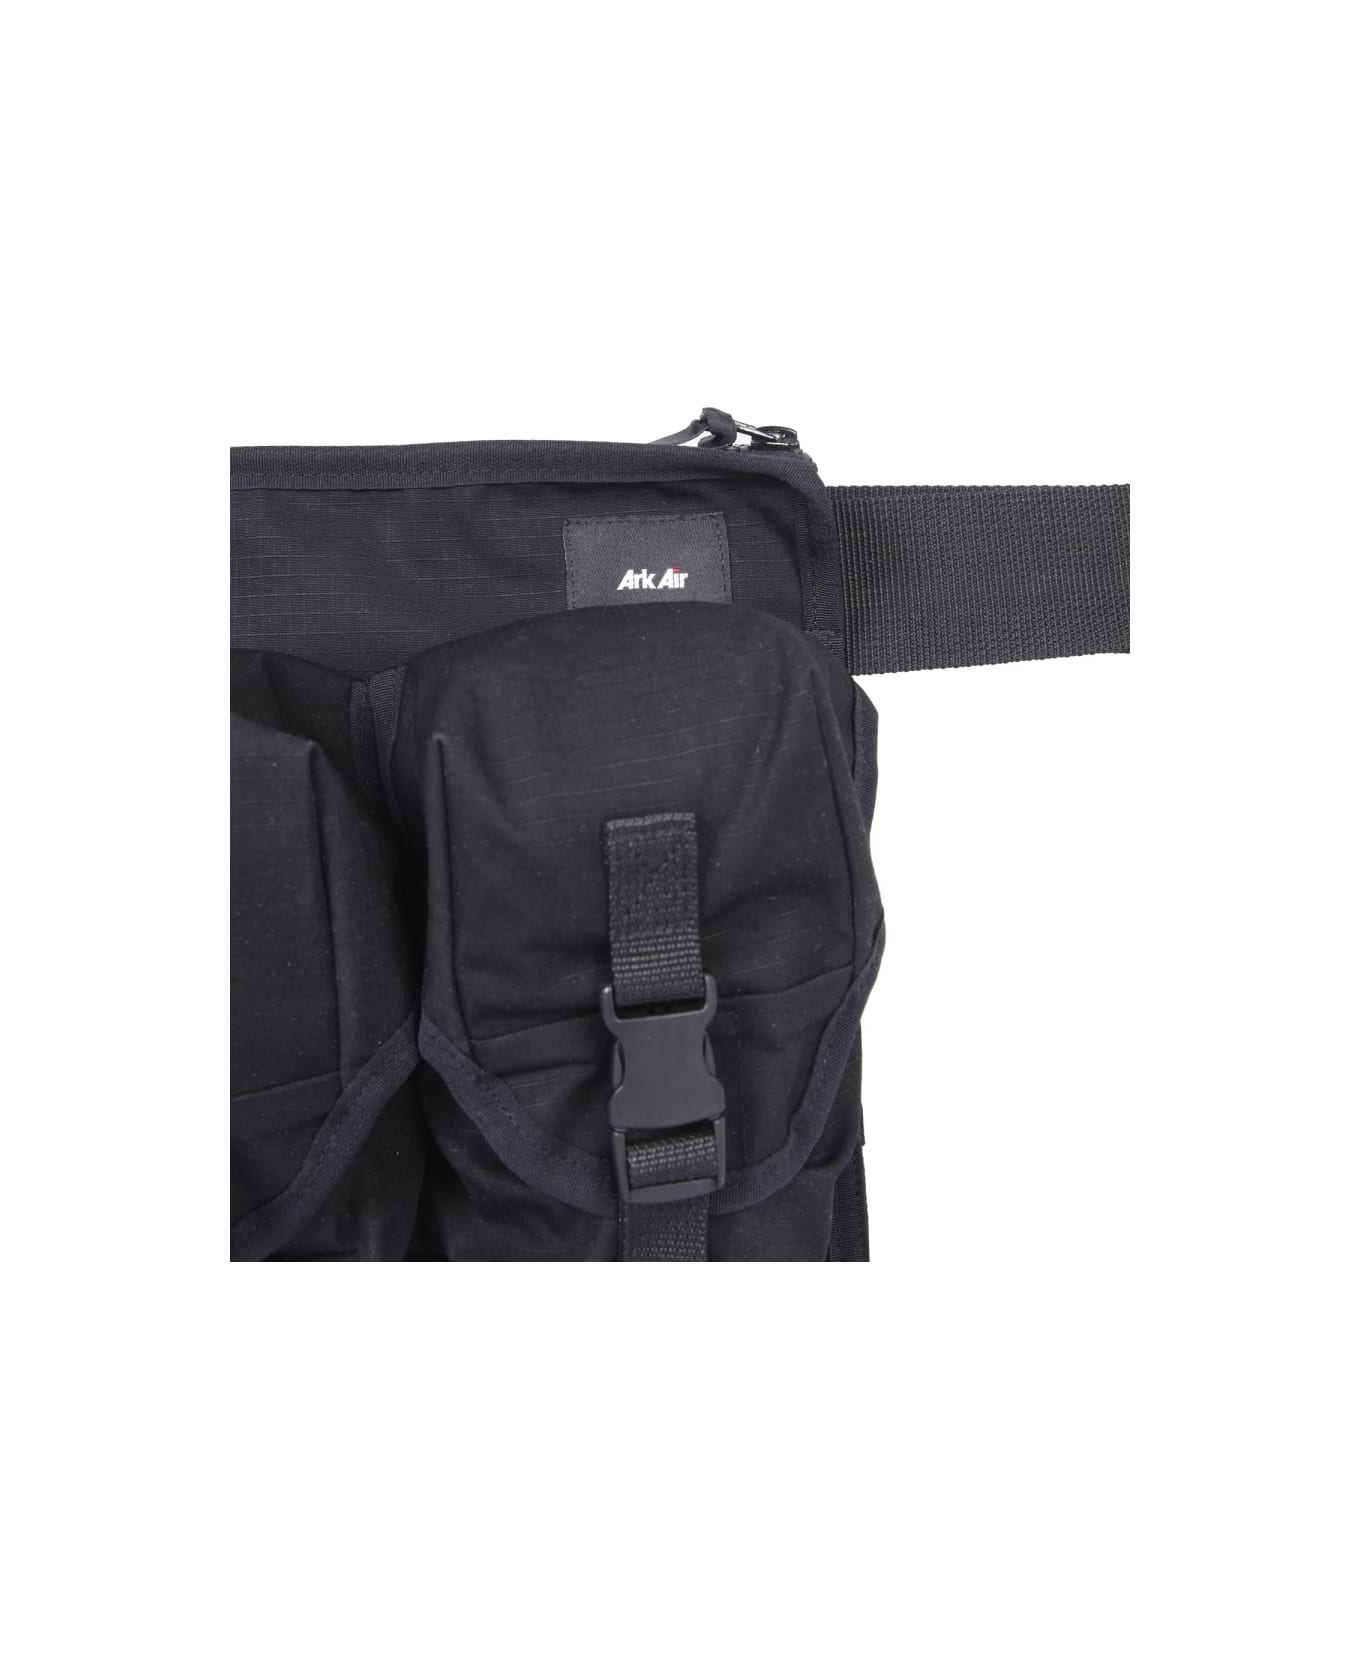 ArkAir Chest Bag Rig - BLACK